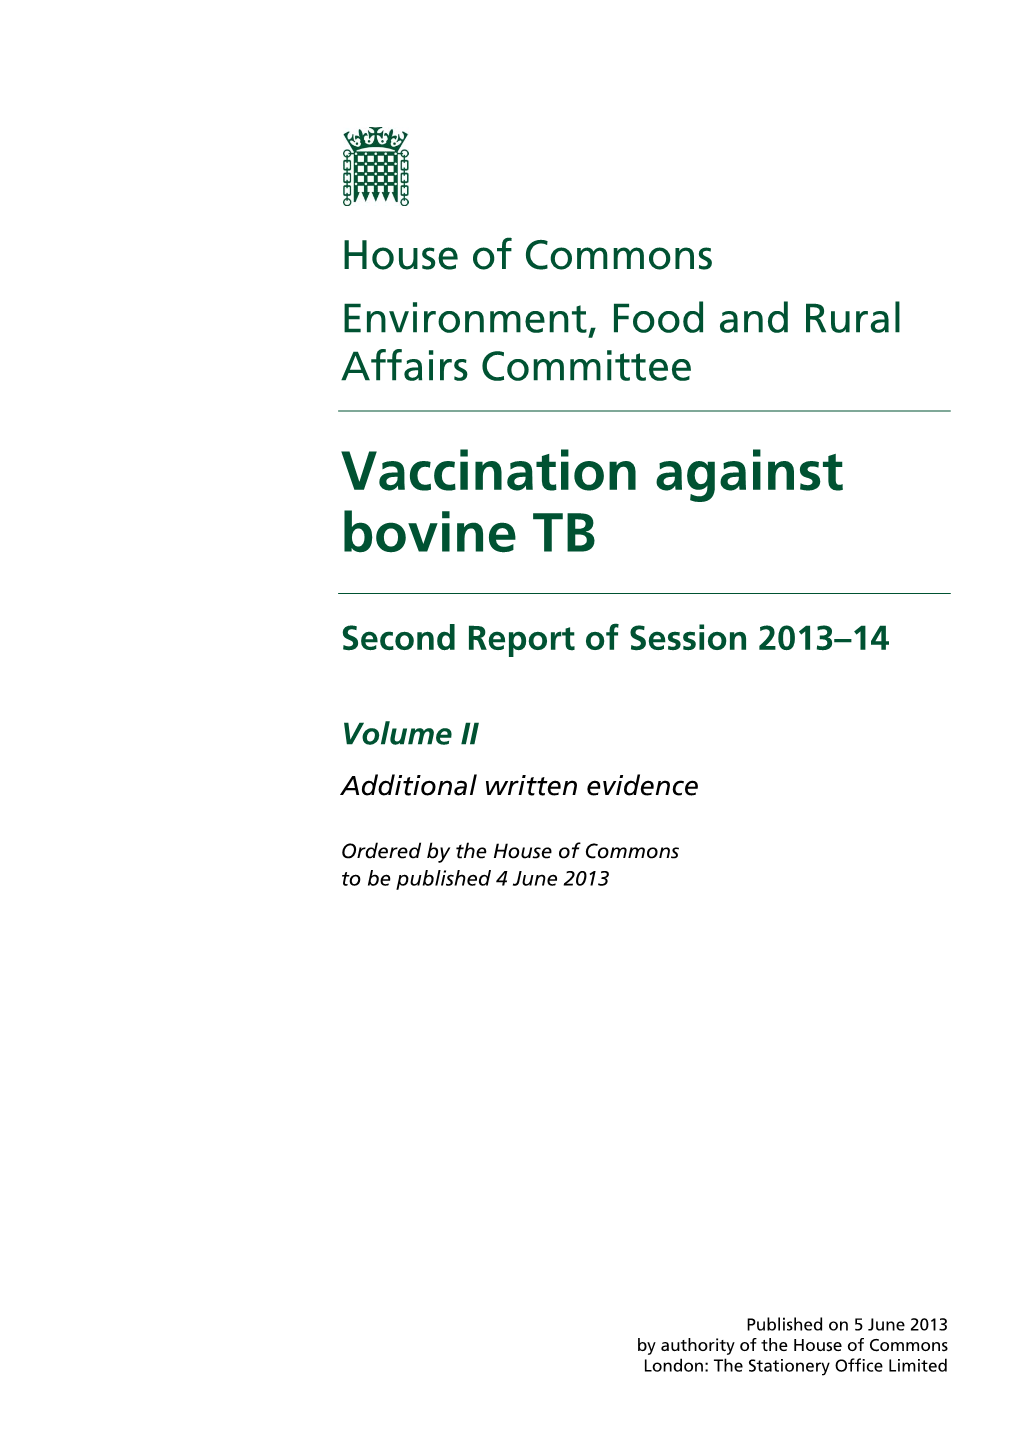 Vaccination Against Bovine TB